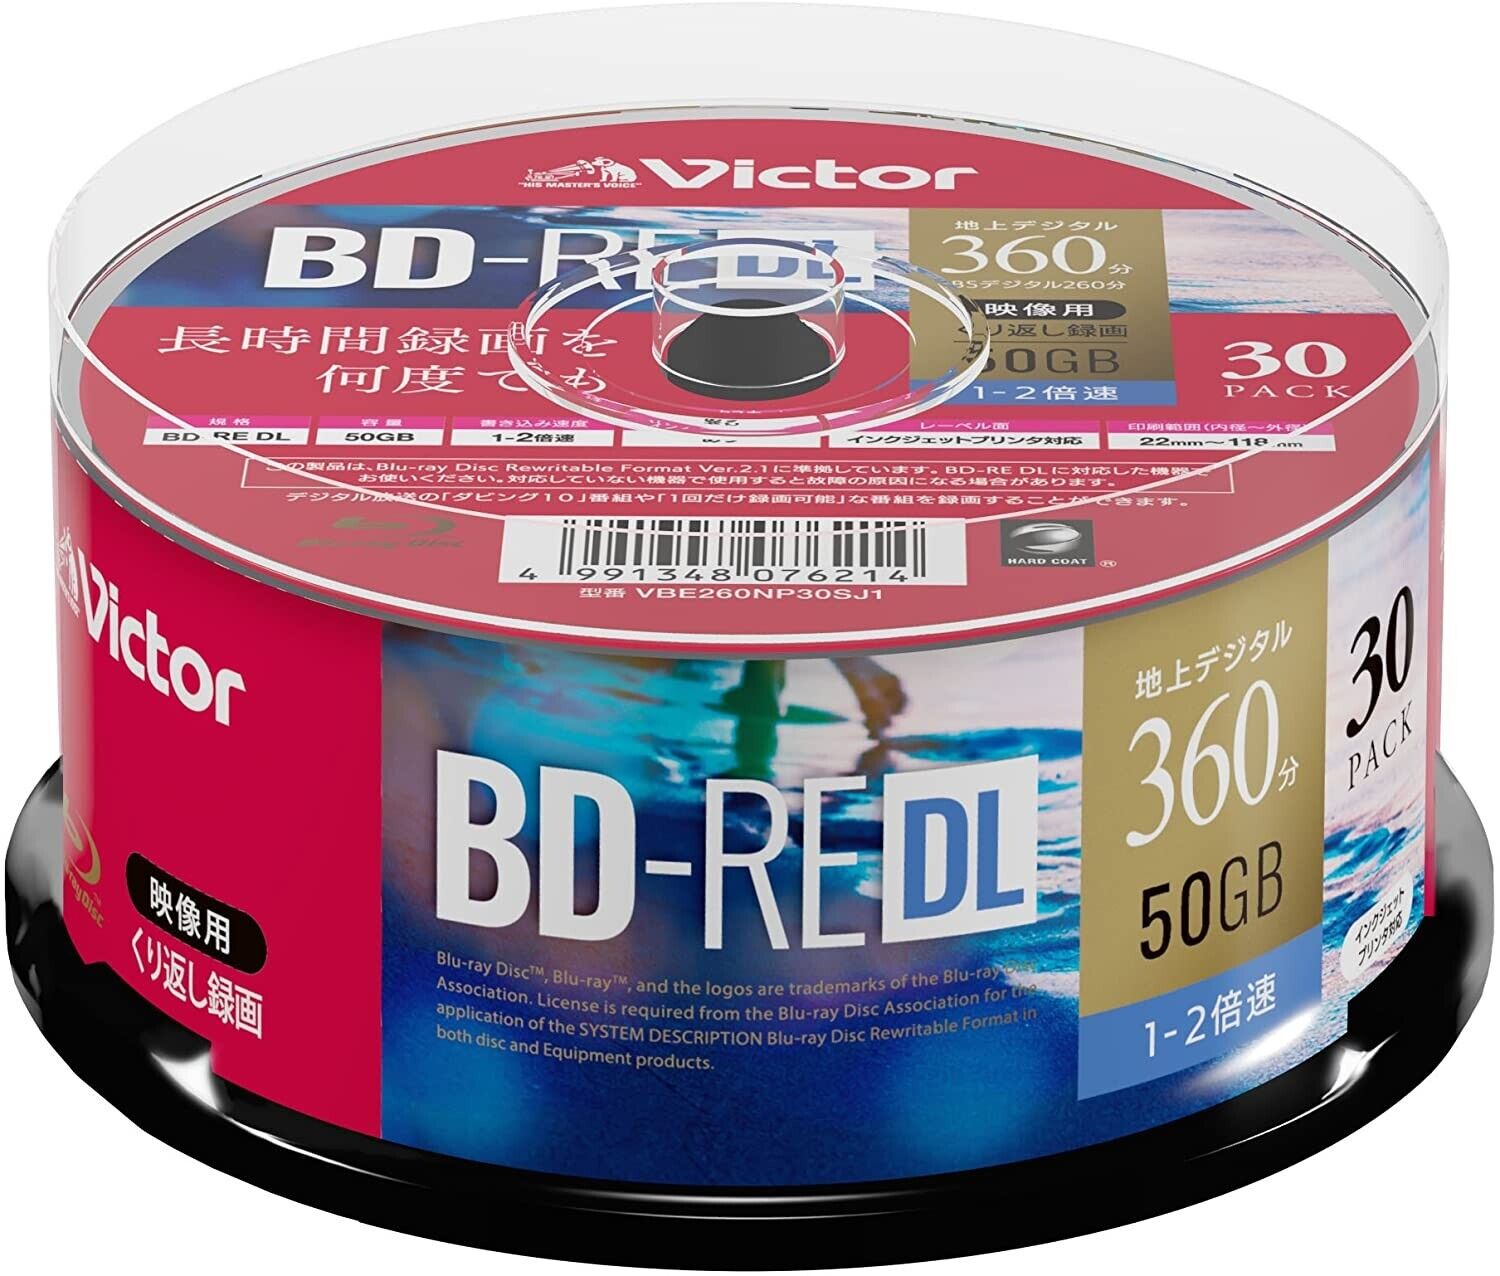 Victor JVC 50GB BD-RE DL Bluray Disc Rewritable  Inkjet Printable